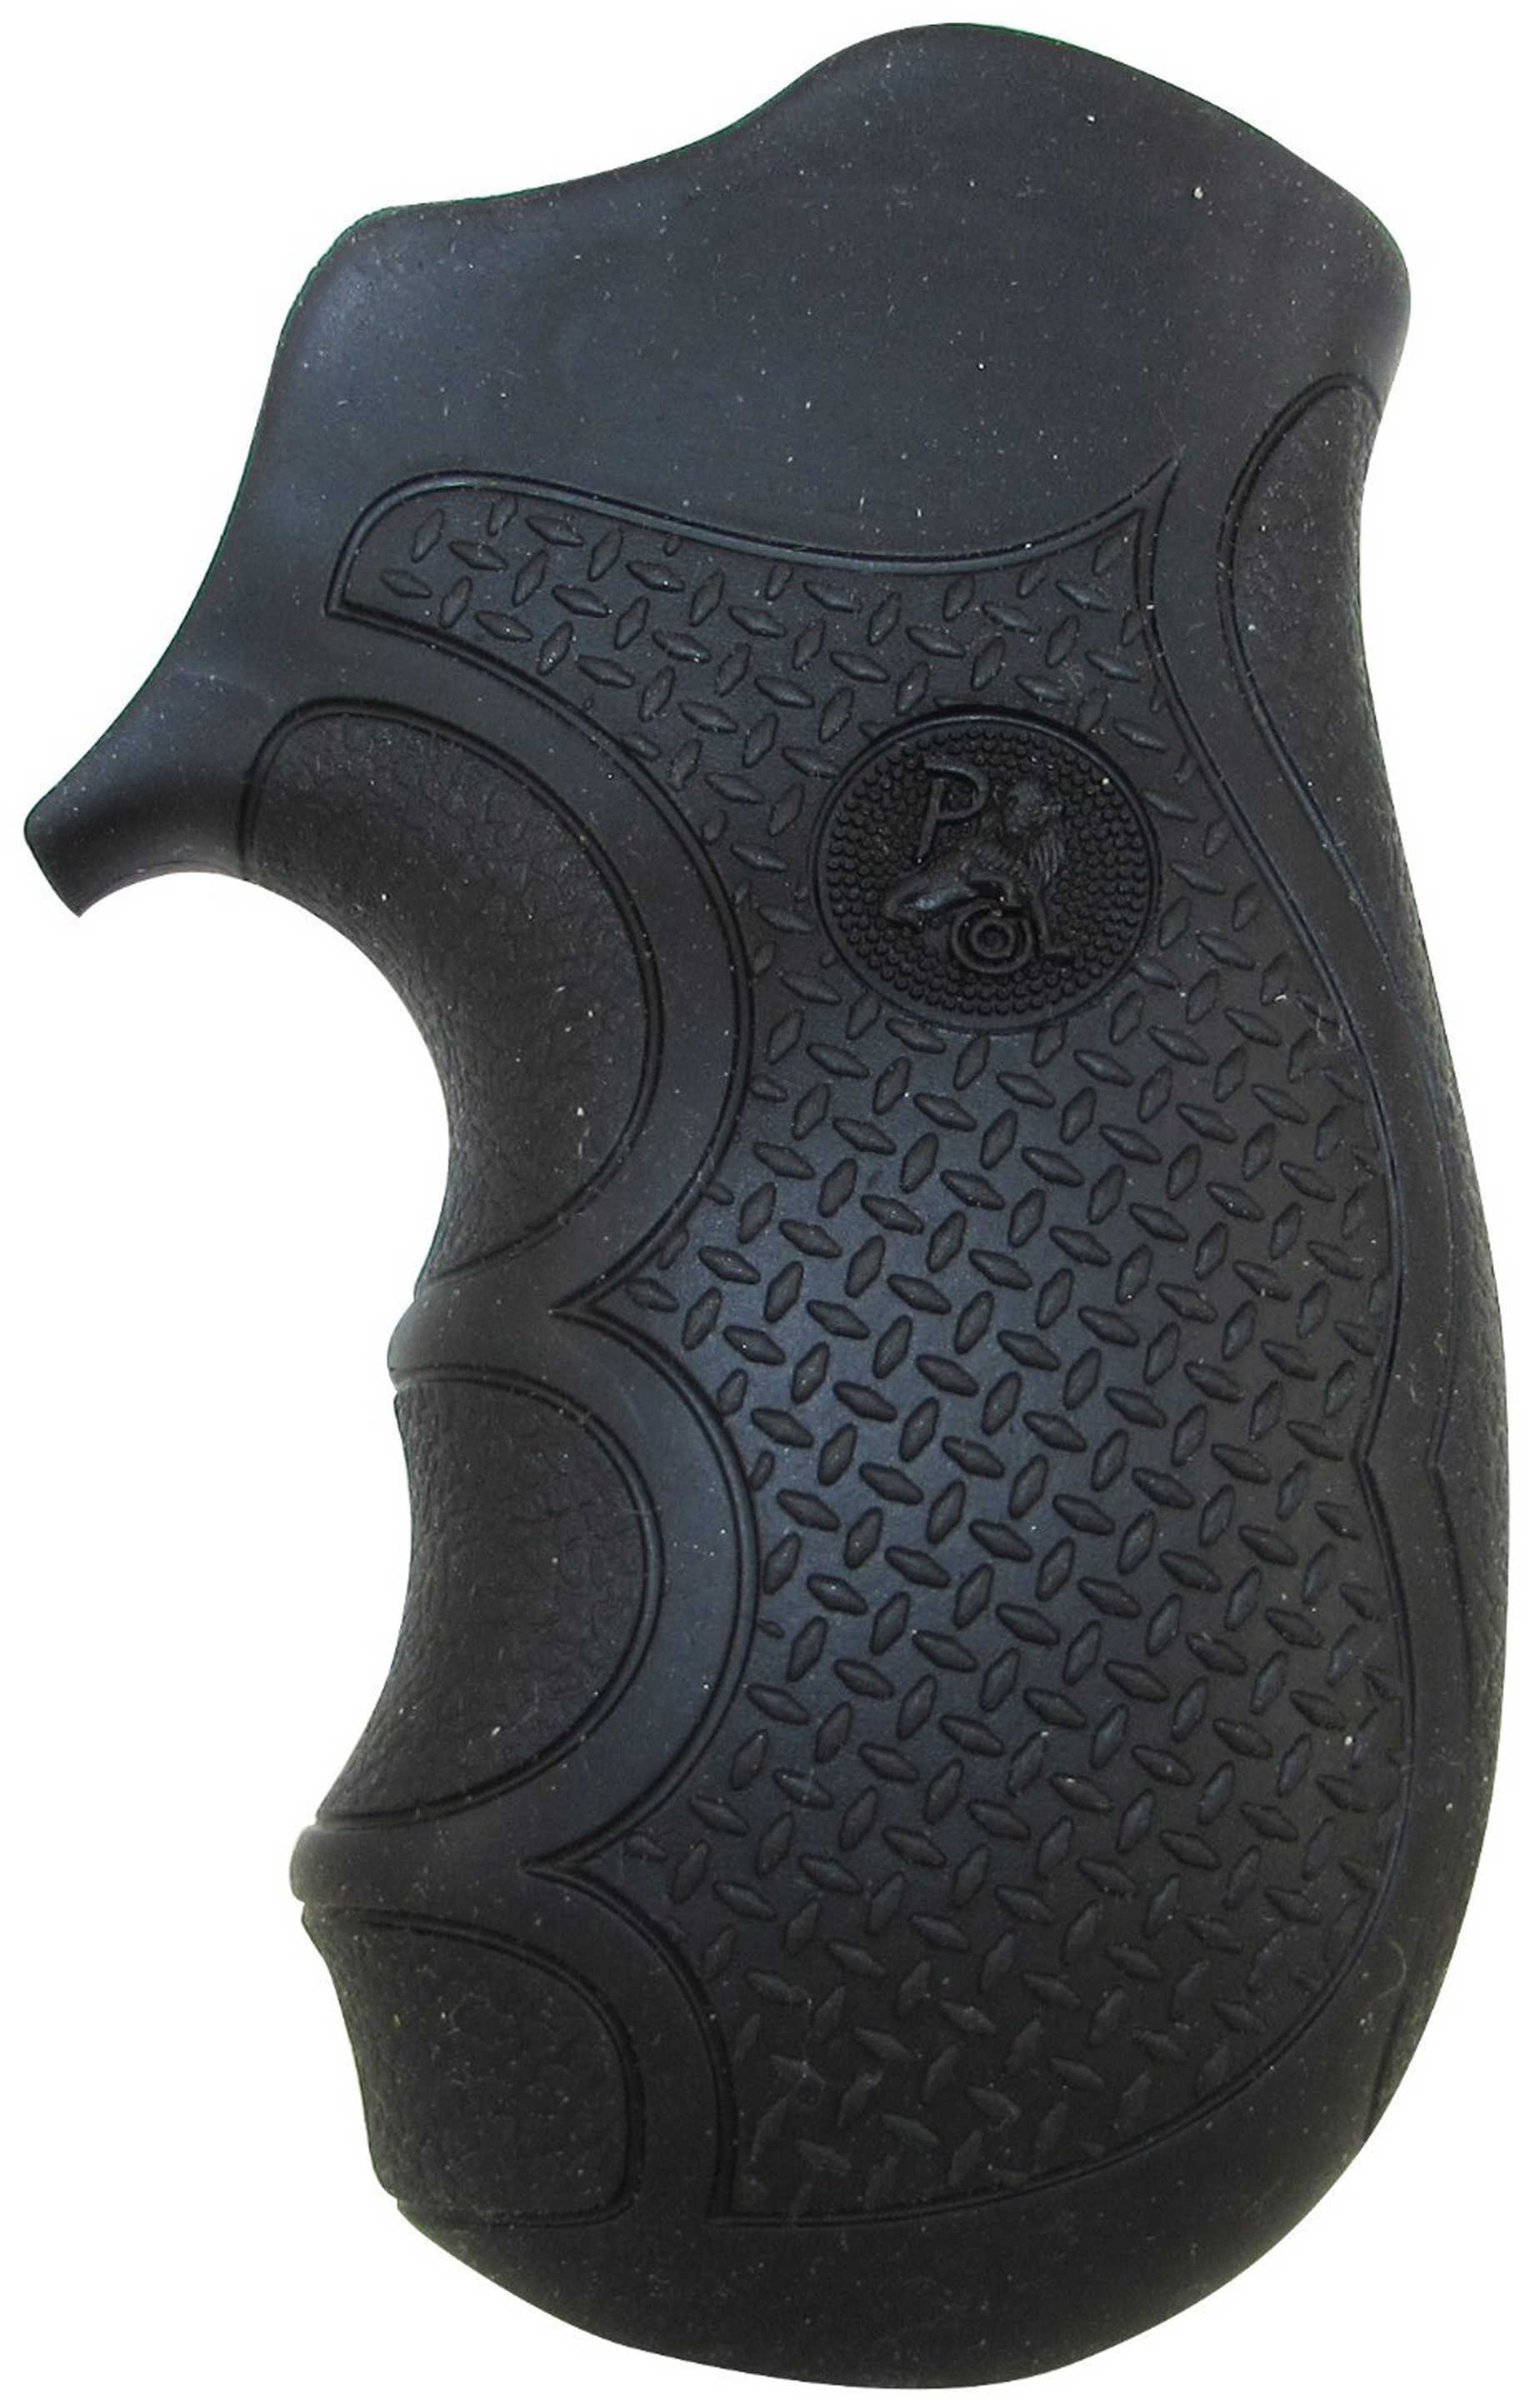 Pachmayr 02482 Diamond Pro Ergonomic Pistol Grip Ruger Black ABS Polymer